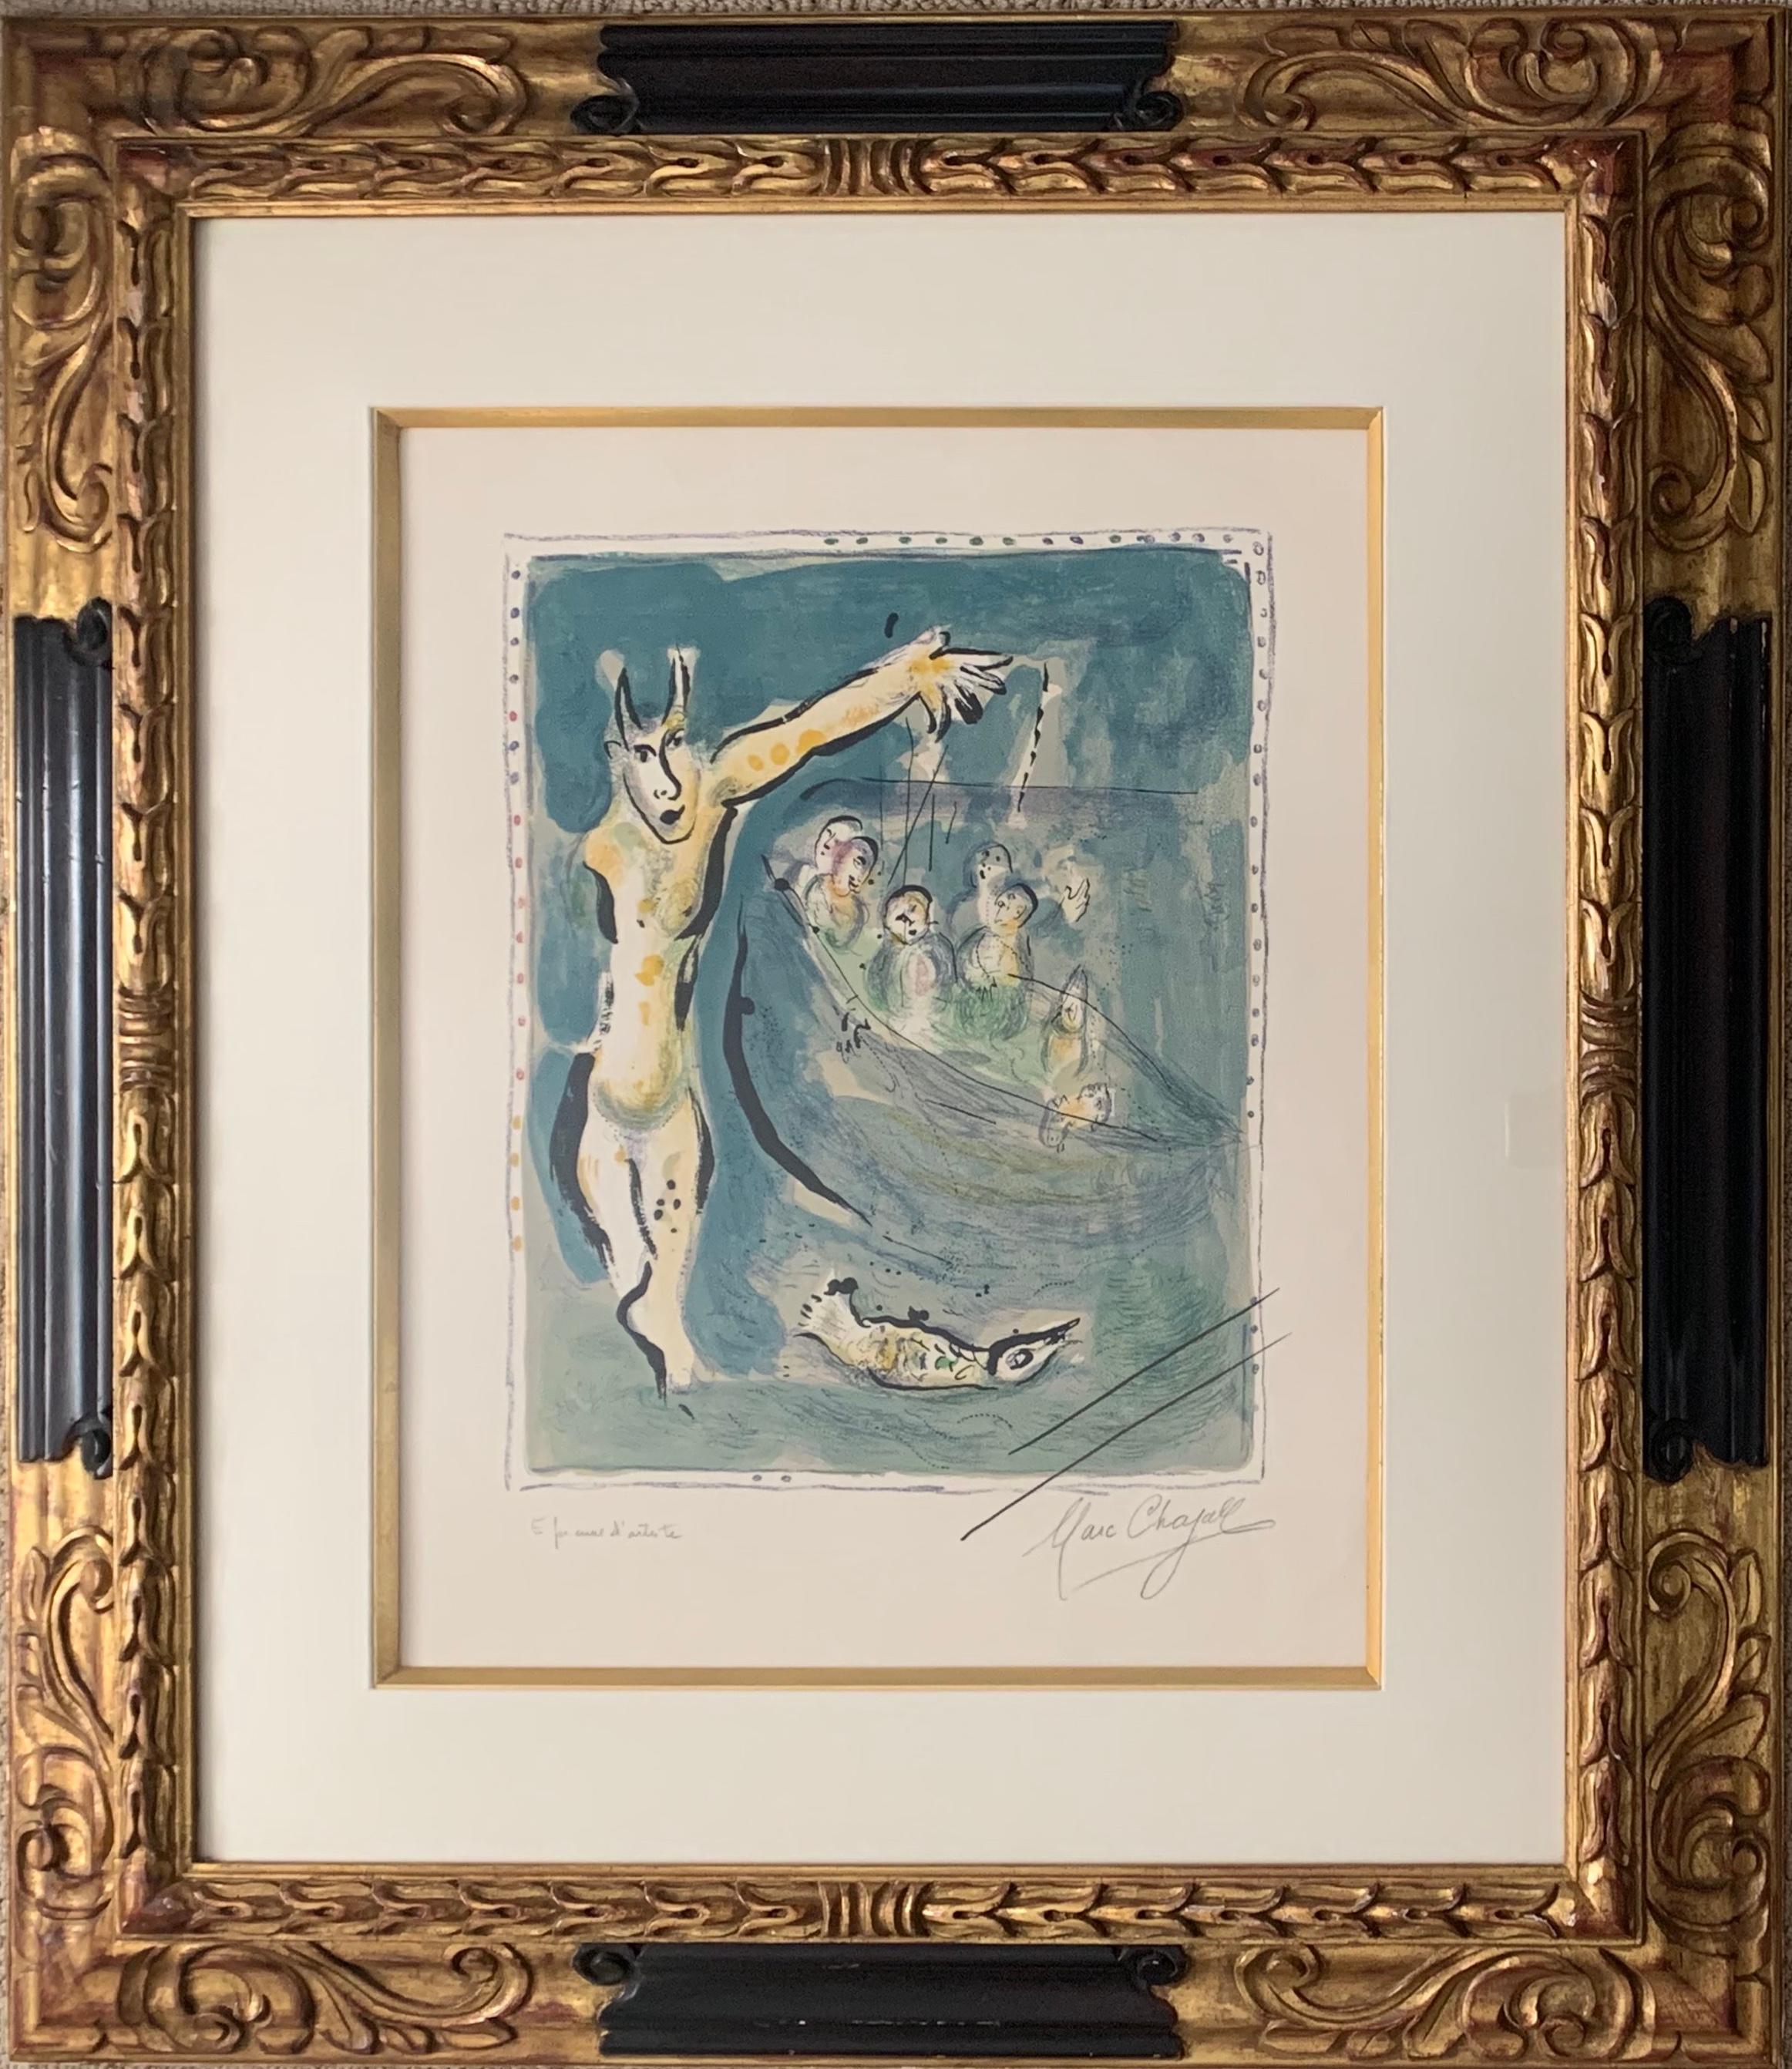 Près des eaux d'Aulis blanches - Print by Marc Chagall